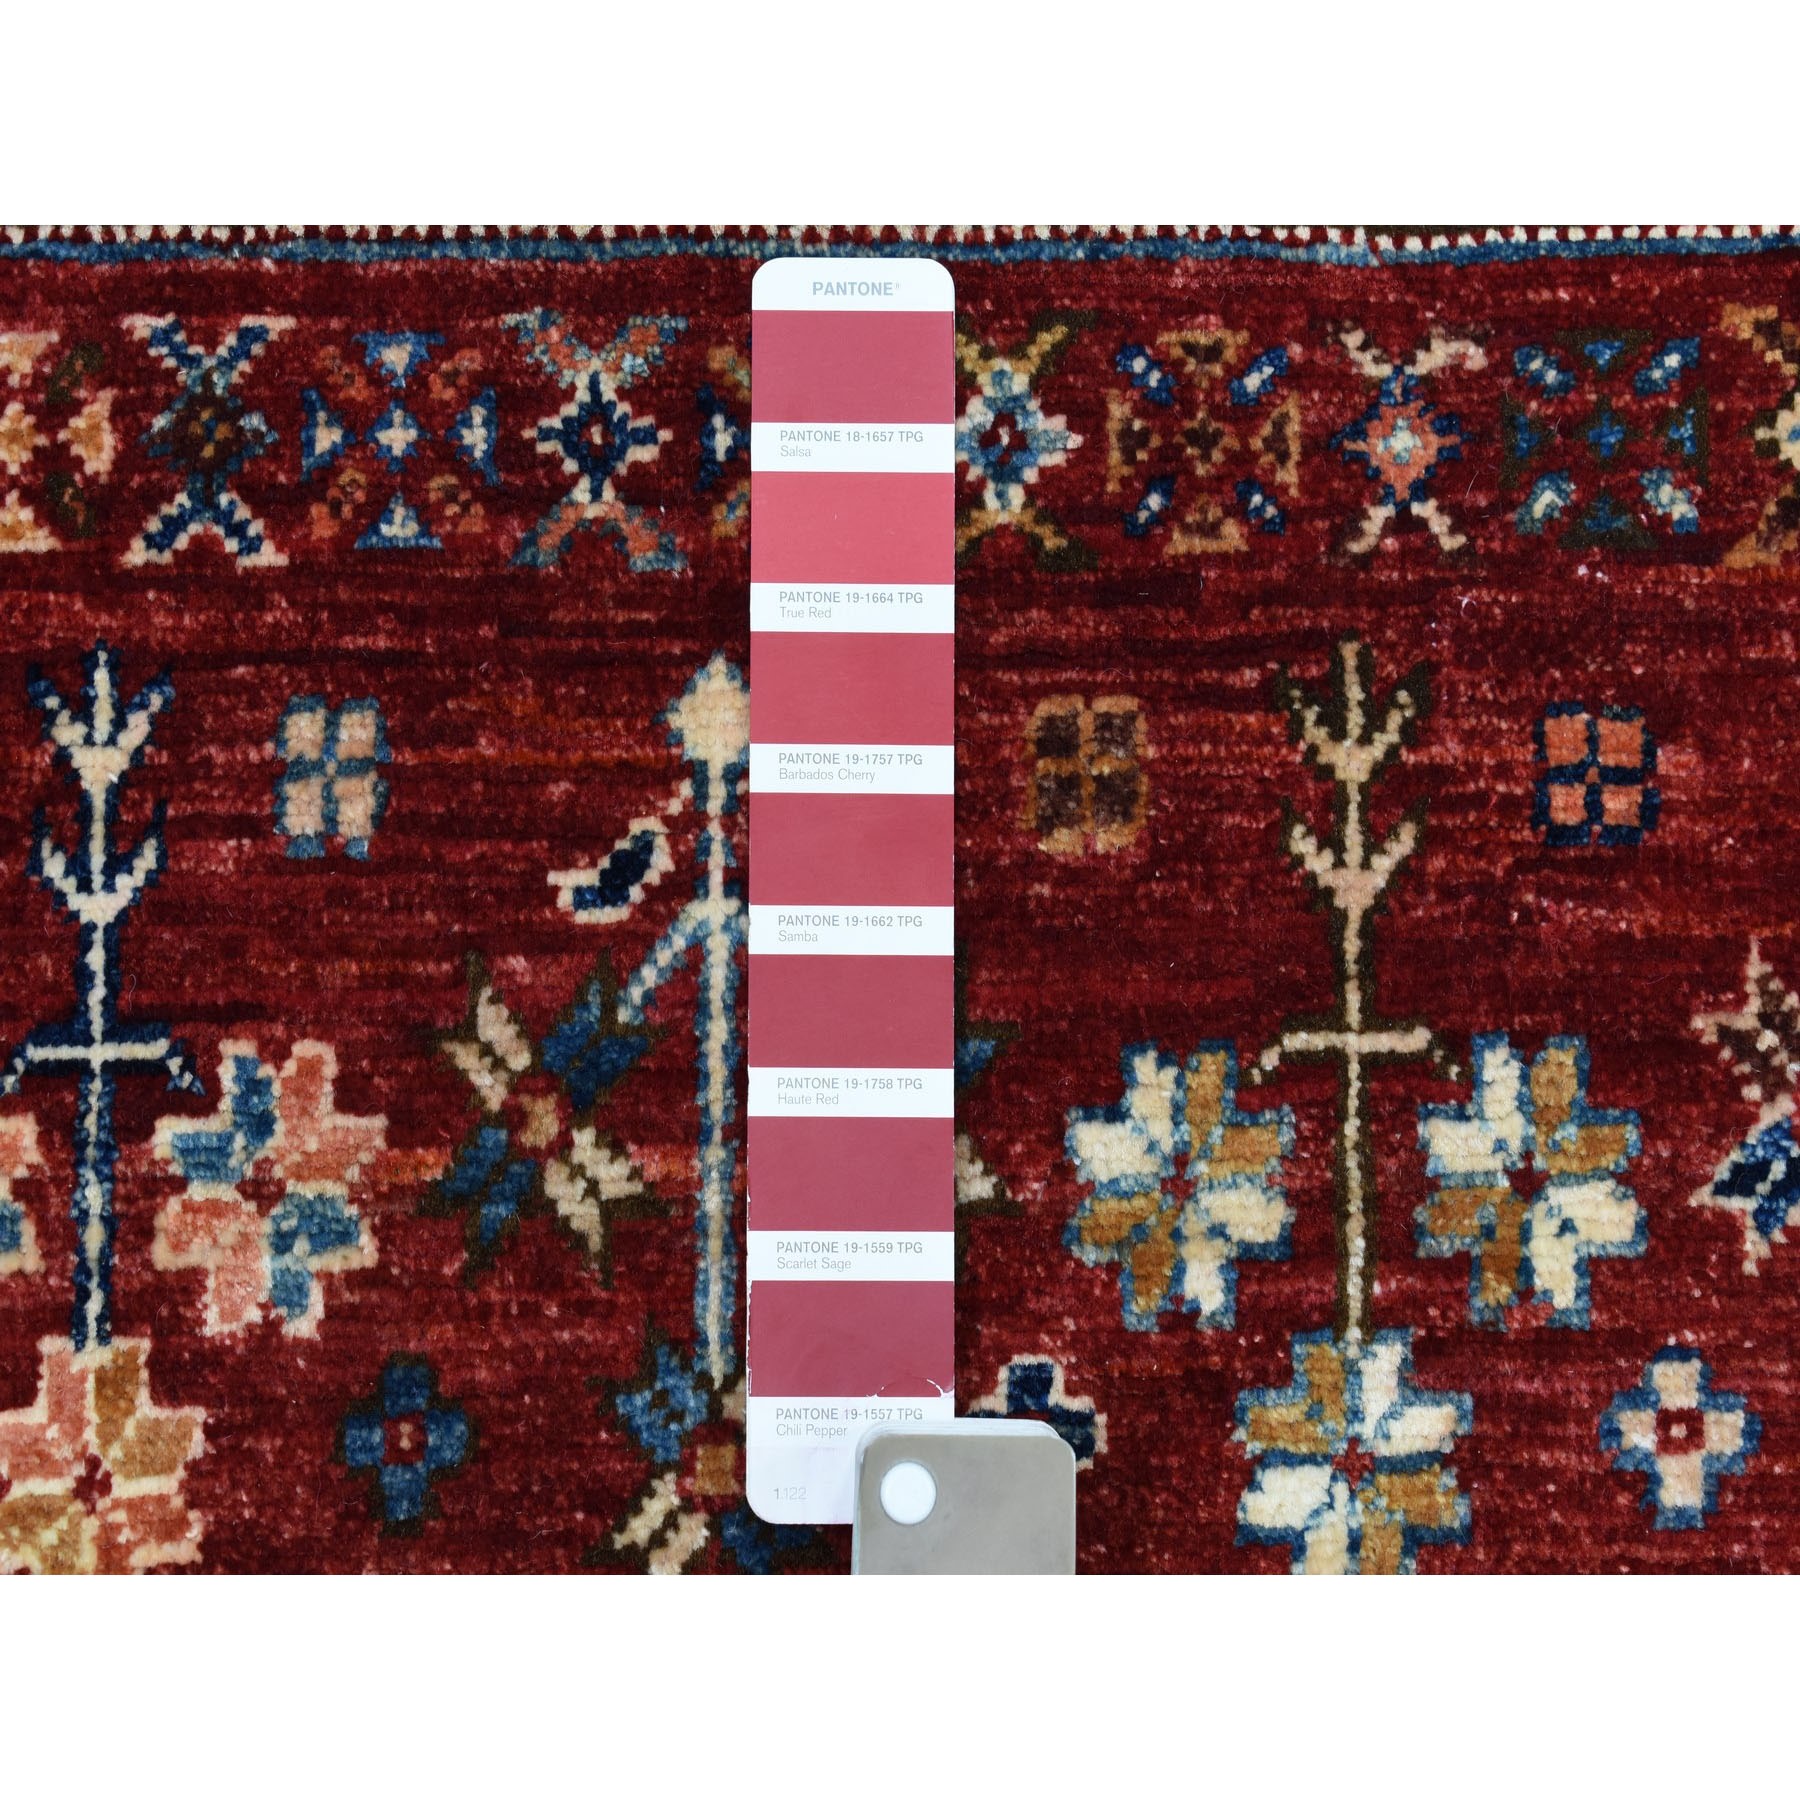 2-5 x6-6  Khorjin Design Runner Red Super Kazak Tribal Pure Wool Hand Knotted Oriental Rug 